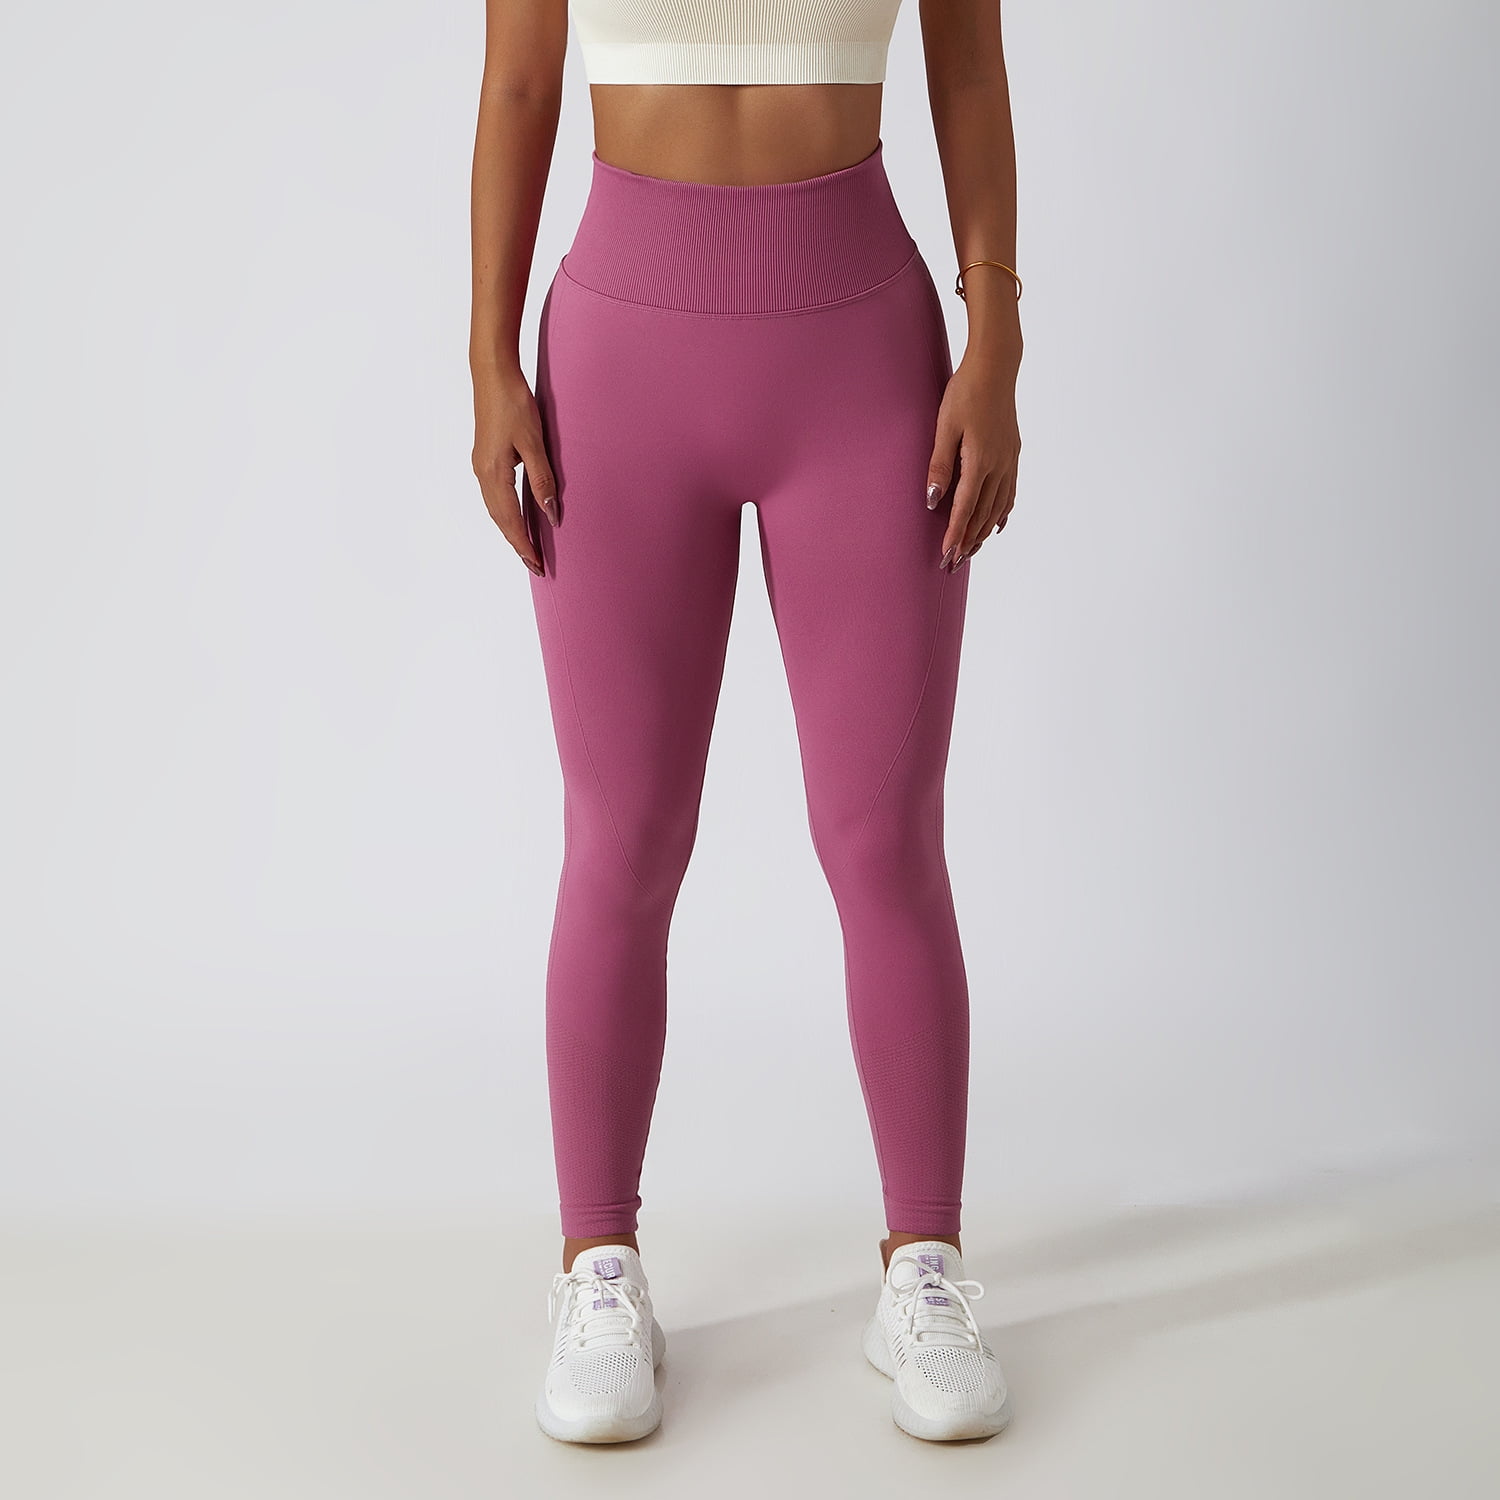 pxiakgy pants for women workout pants for women high waist solid color  running yoga pantswomen's casual pants green + xl 